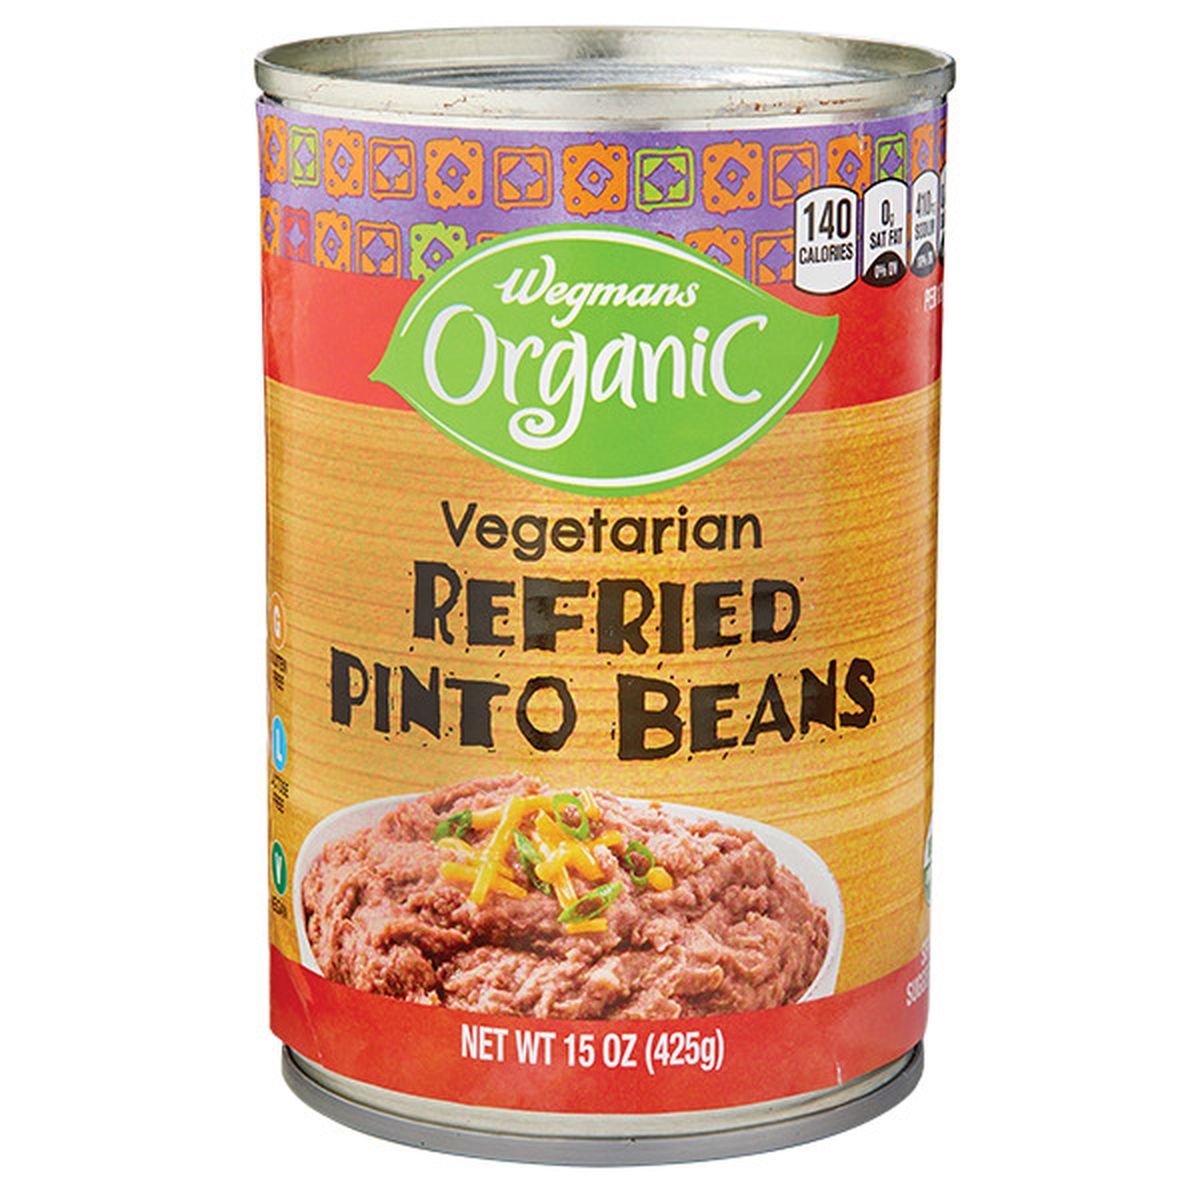 Calories in Wegmans Organic Vegetarian Refried Pinto Beans